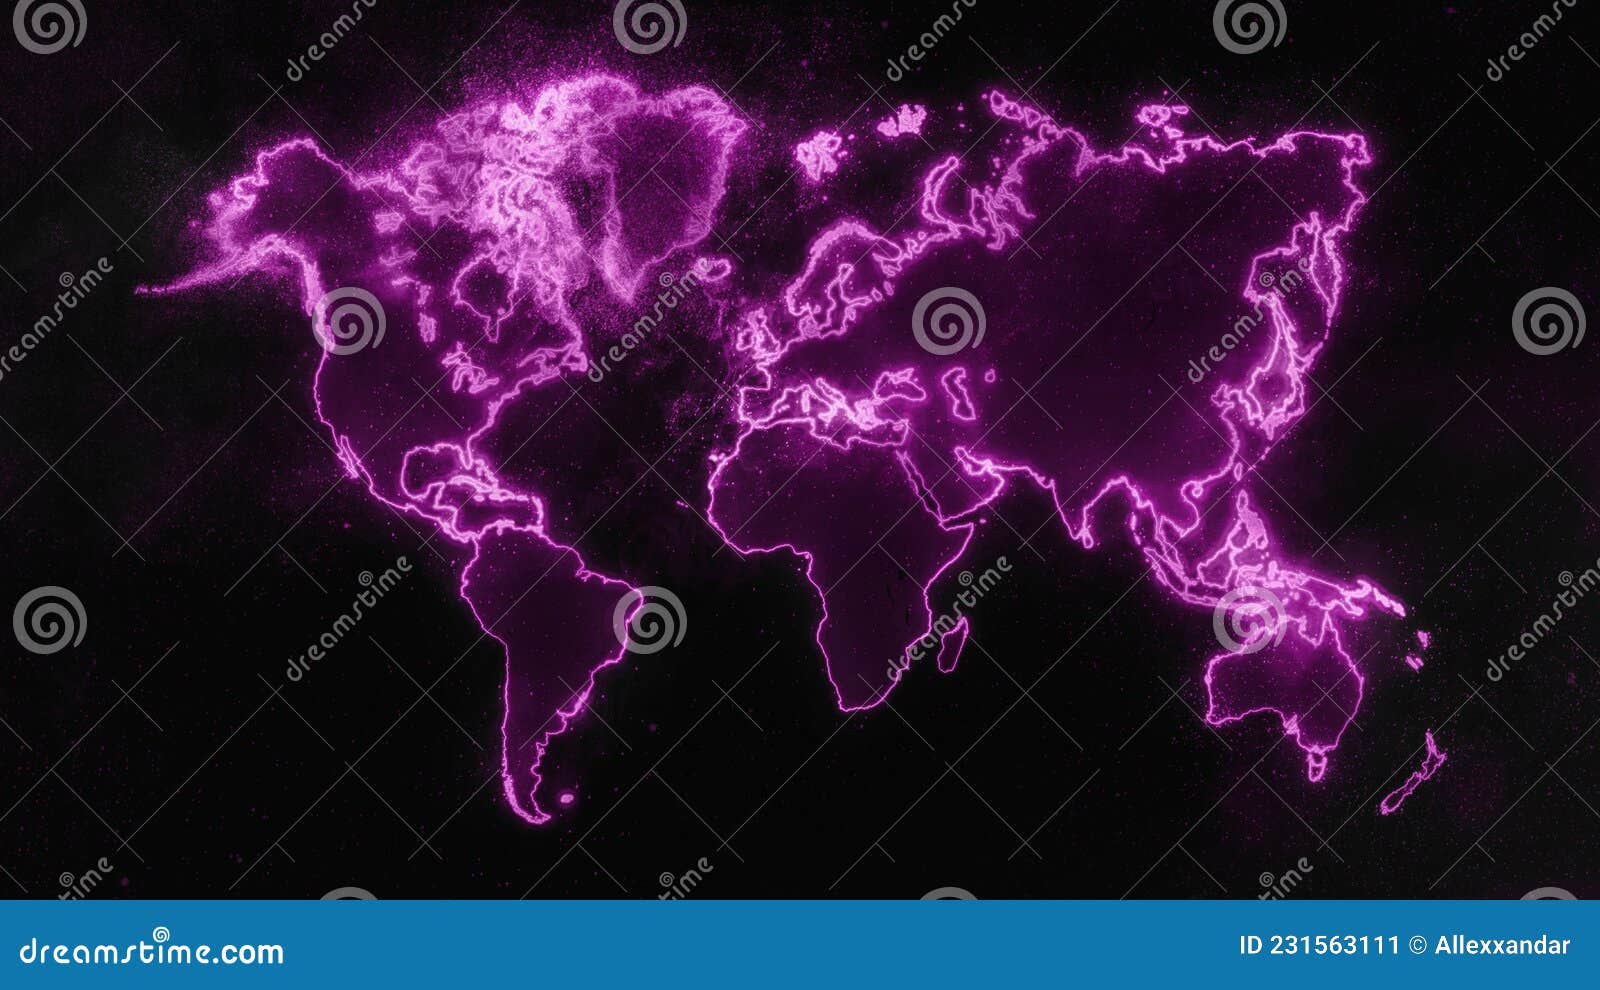 colorful worldÃÂ mapÃÂ on dark background, magentaÃÂ glowing world map